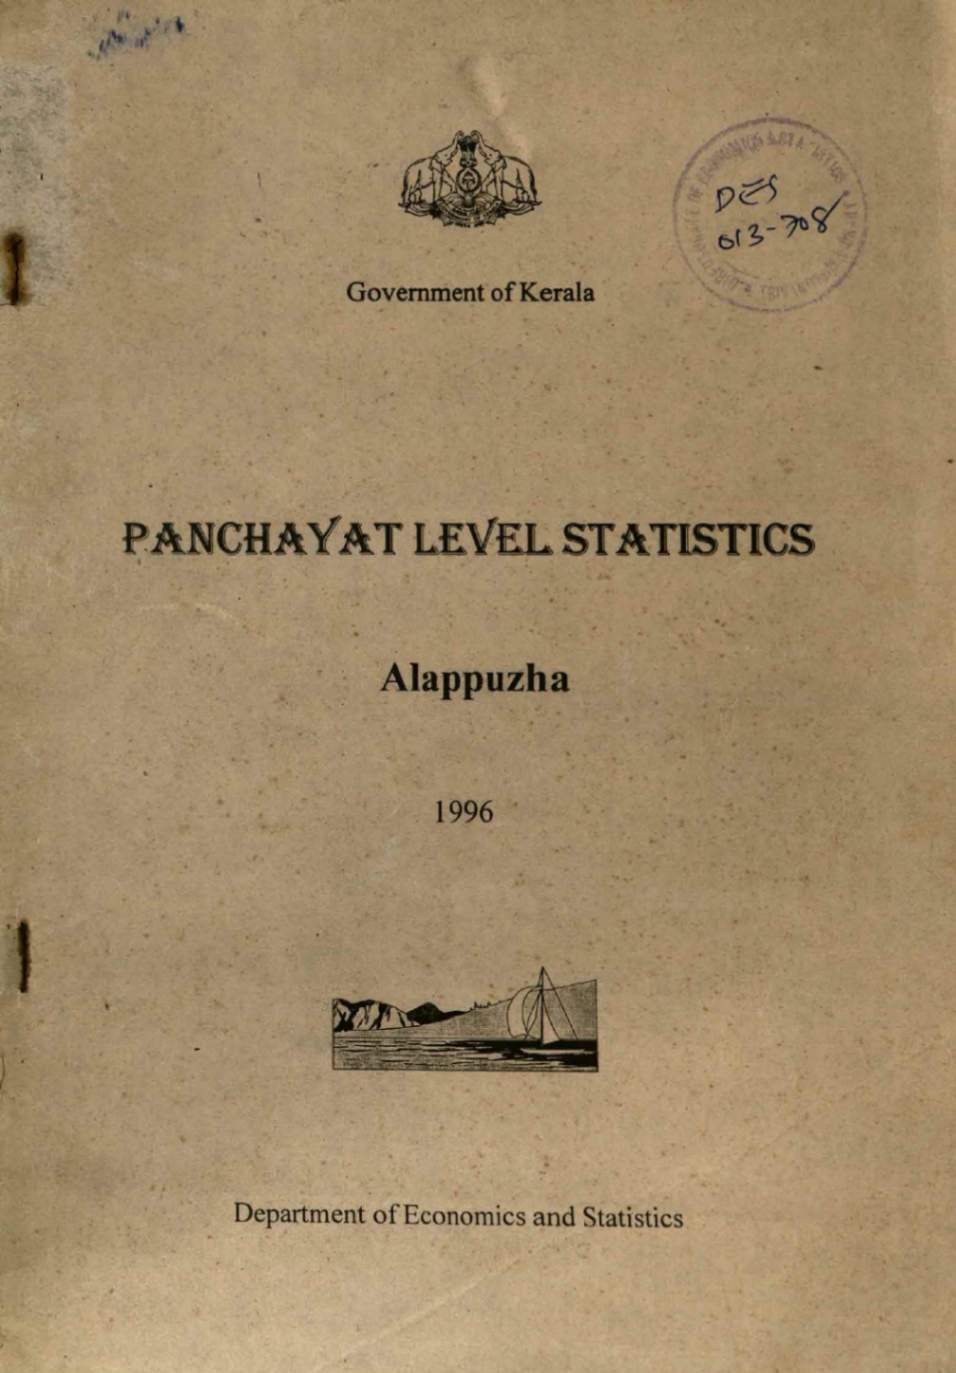 Panchayat level statistics 1996 Alapuzha district